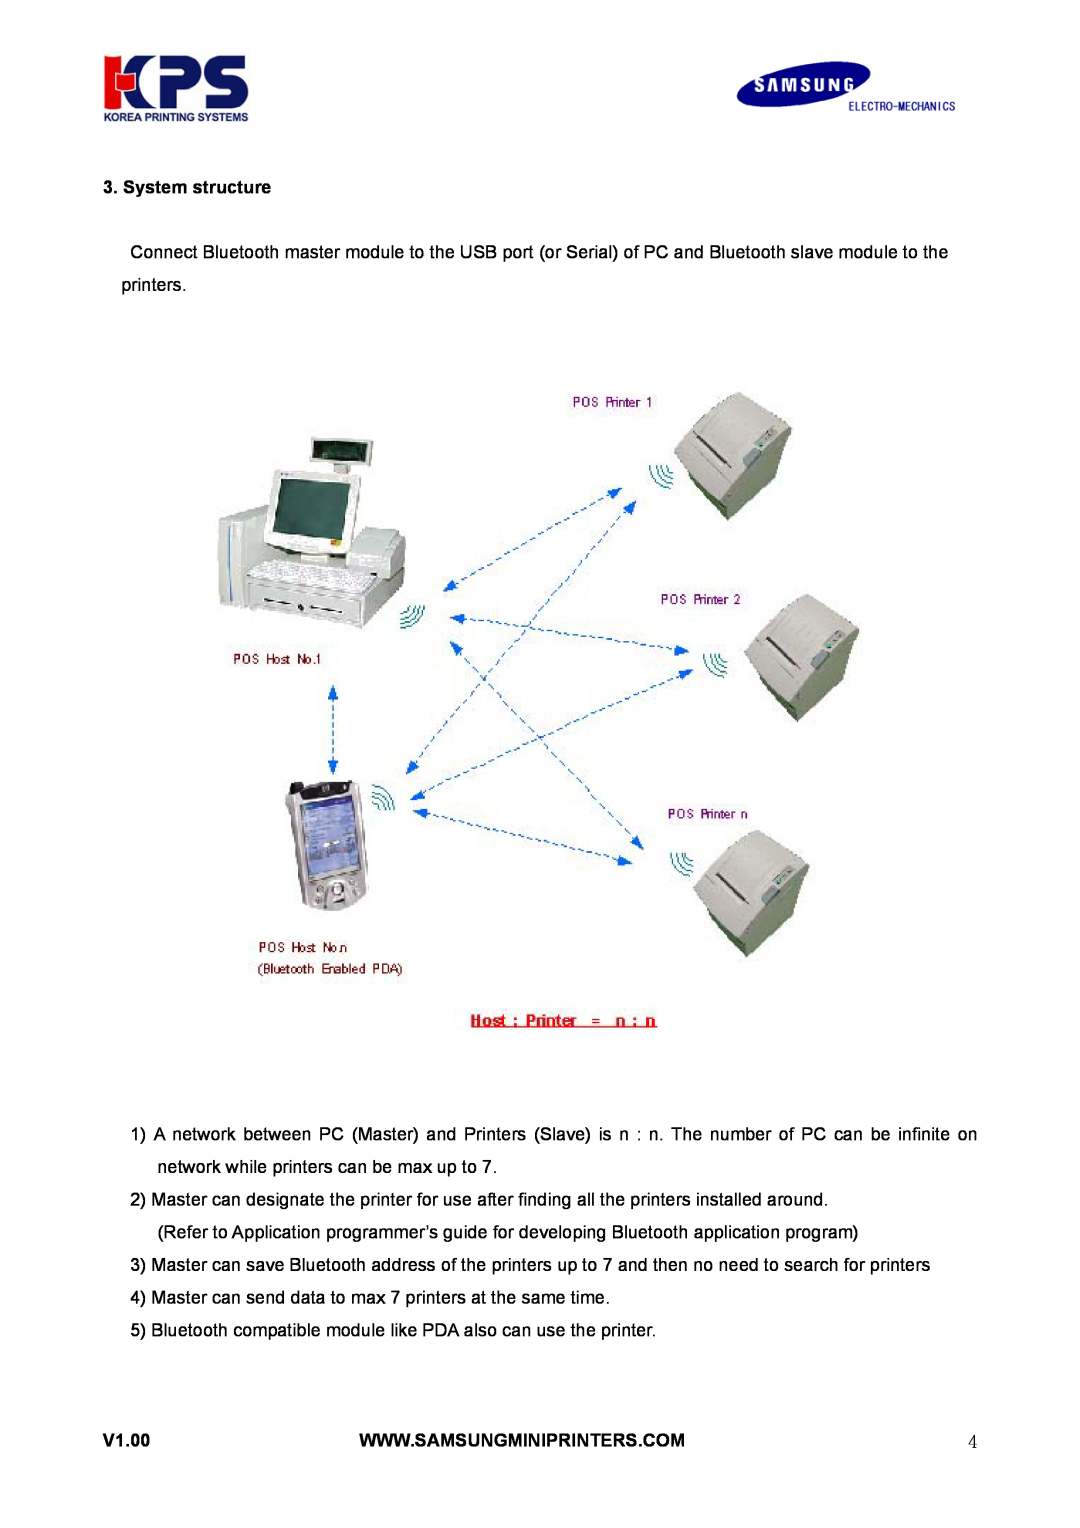 Samsung RIF-BT10 user manual Master can send data to max 7 printers at the same time 